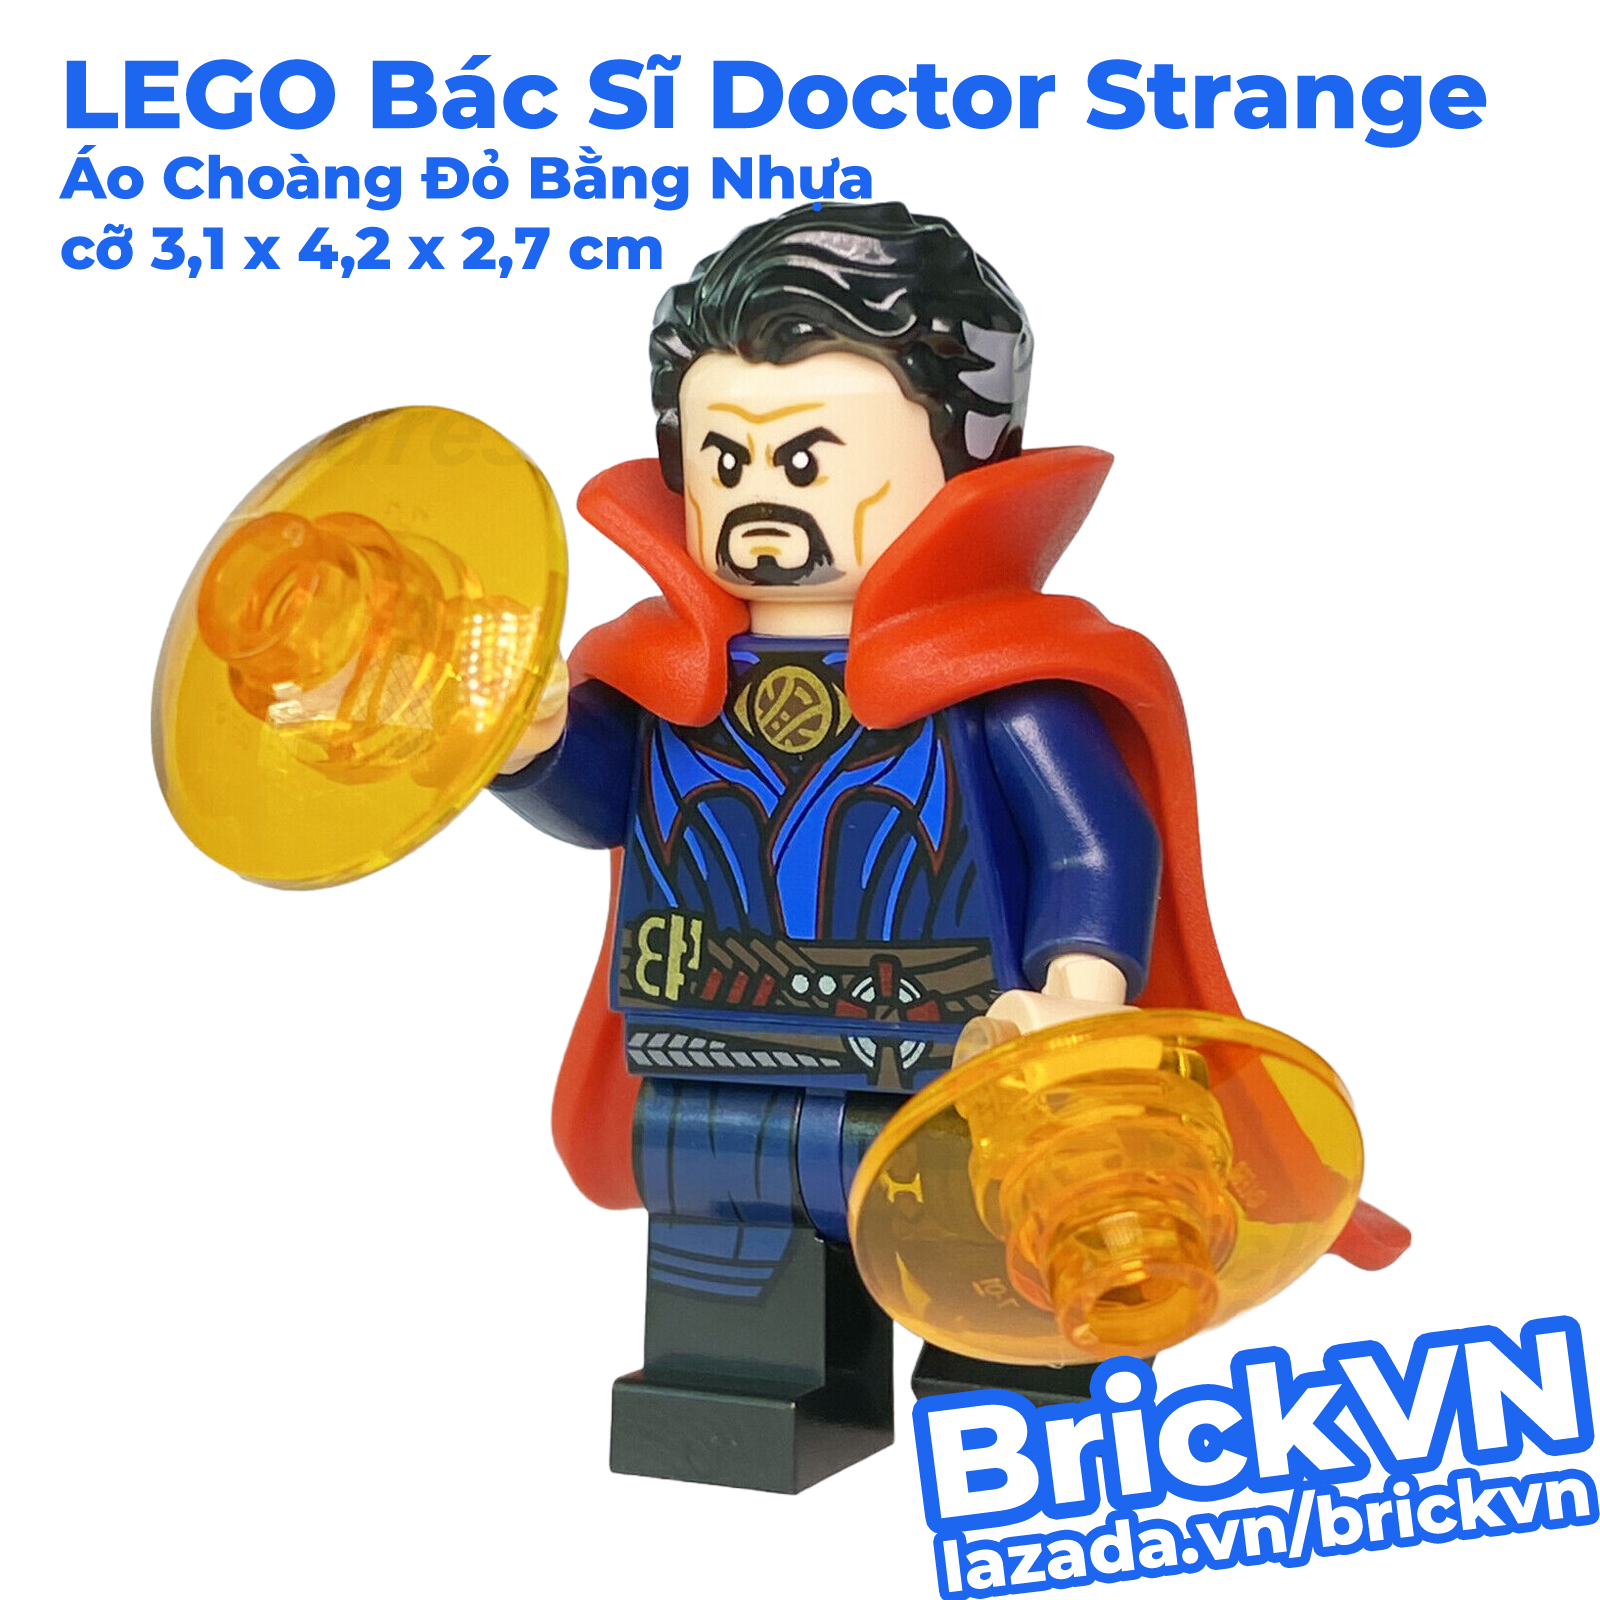 Marvel Super Heroes LEGO Doctor Strange Multiverse of Madness Minifigure